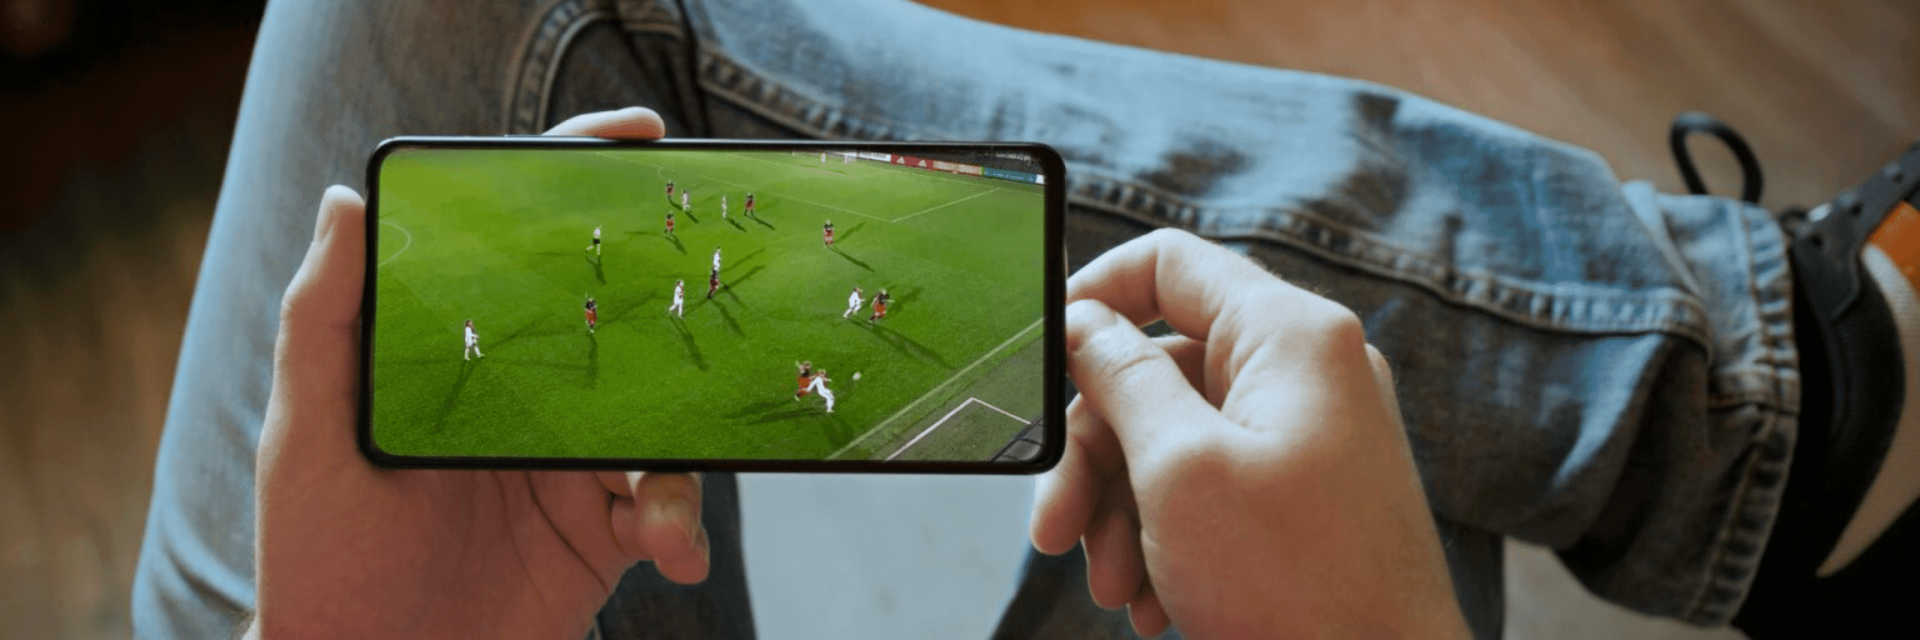 Football match on Iphone